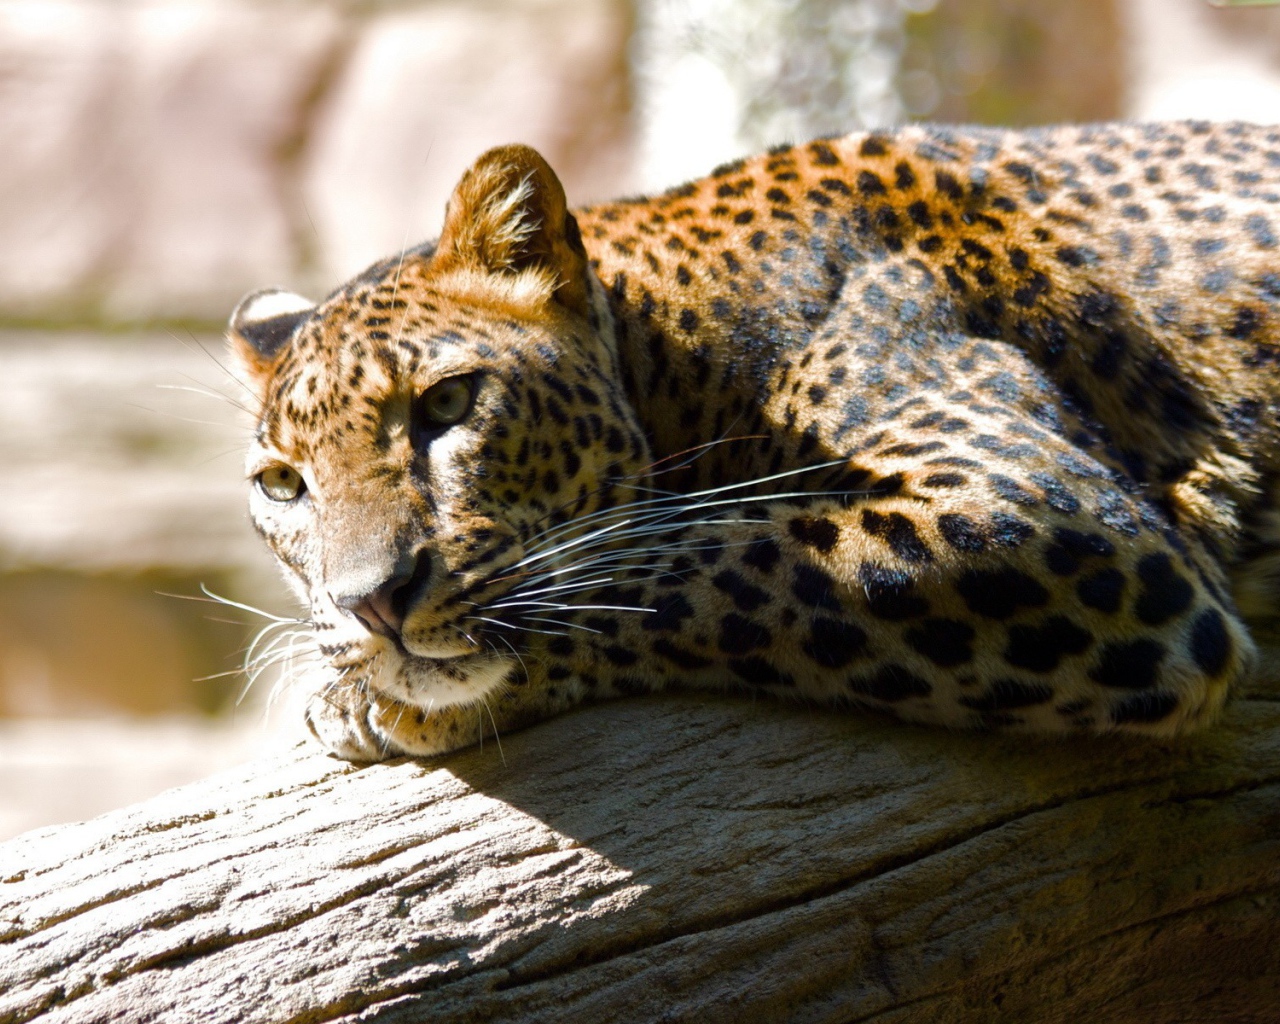 Леопард лежит на бревне